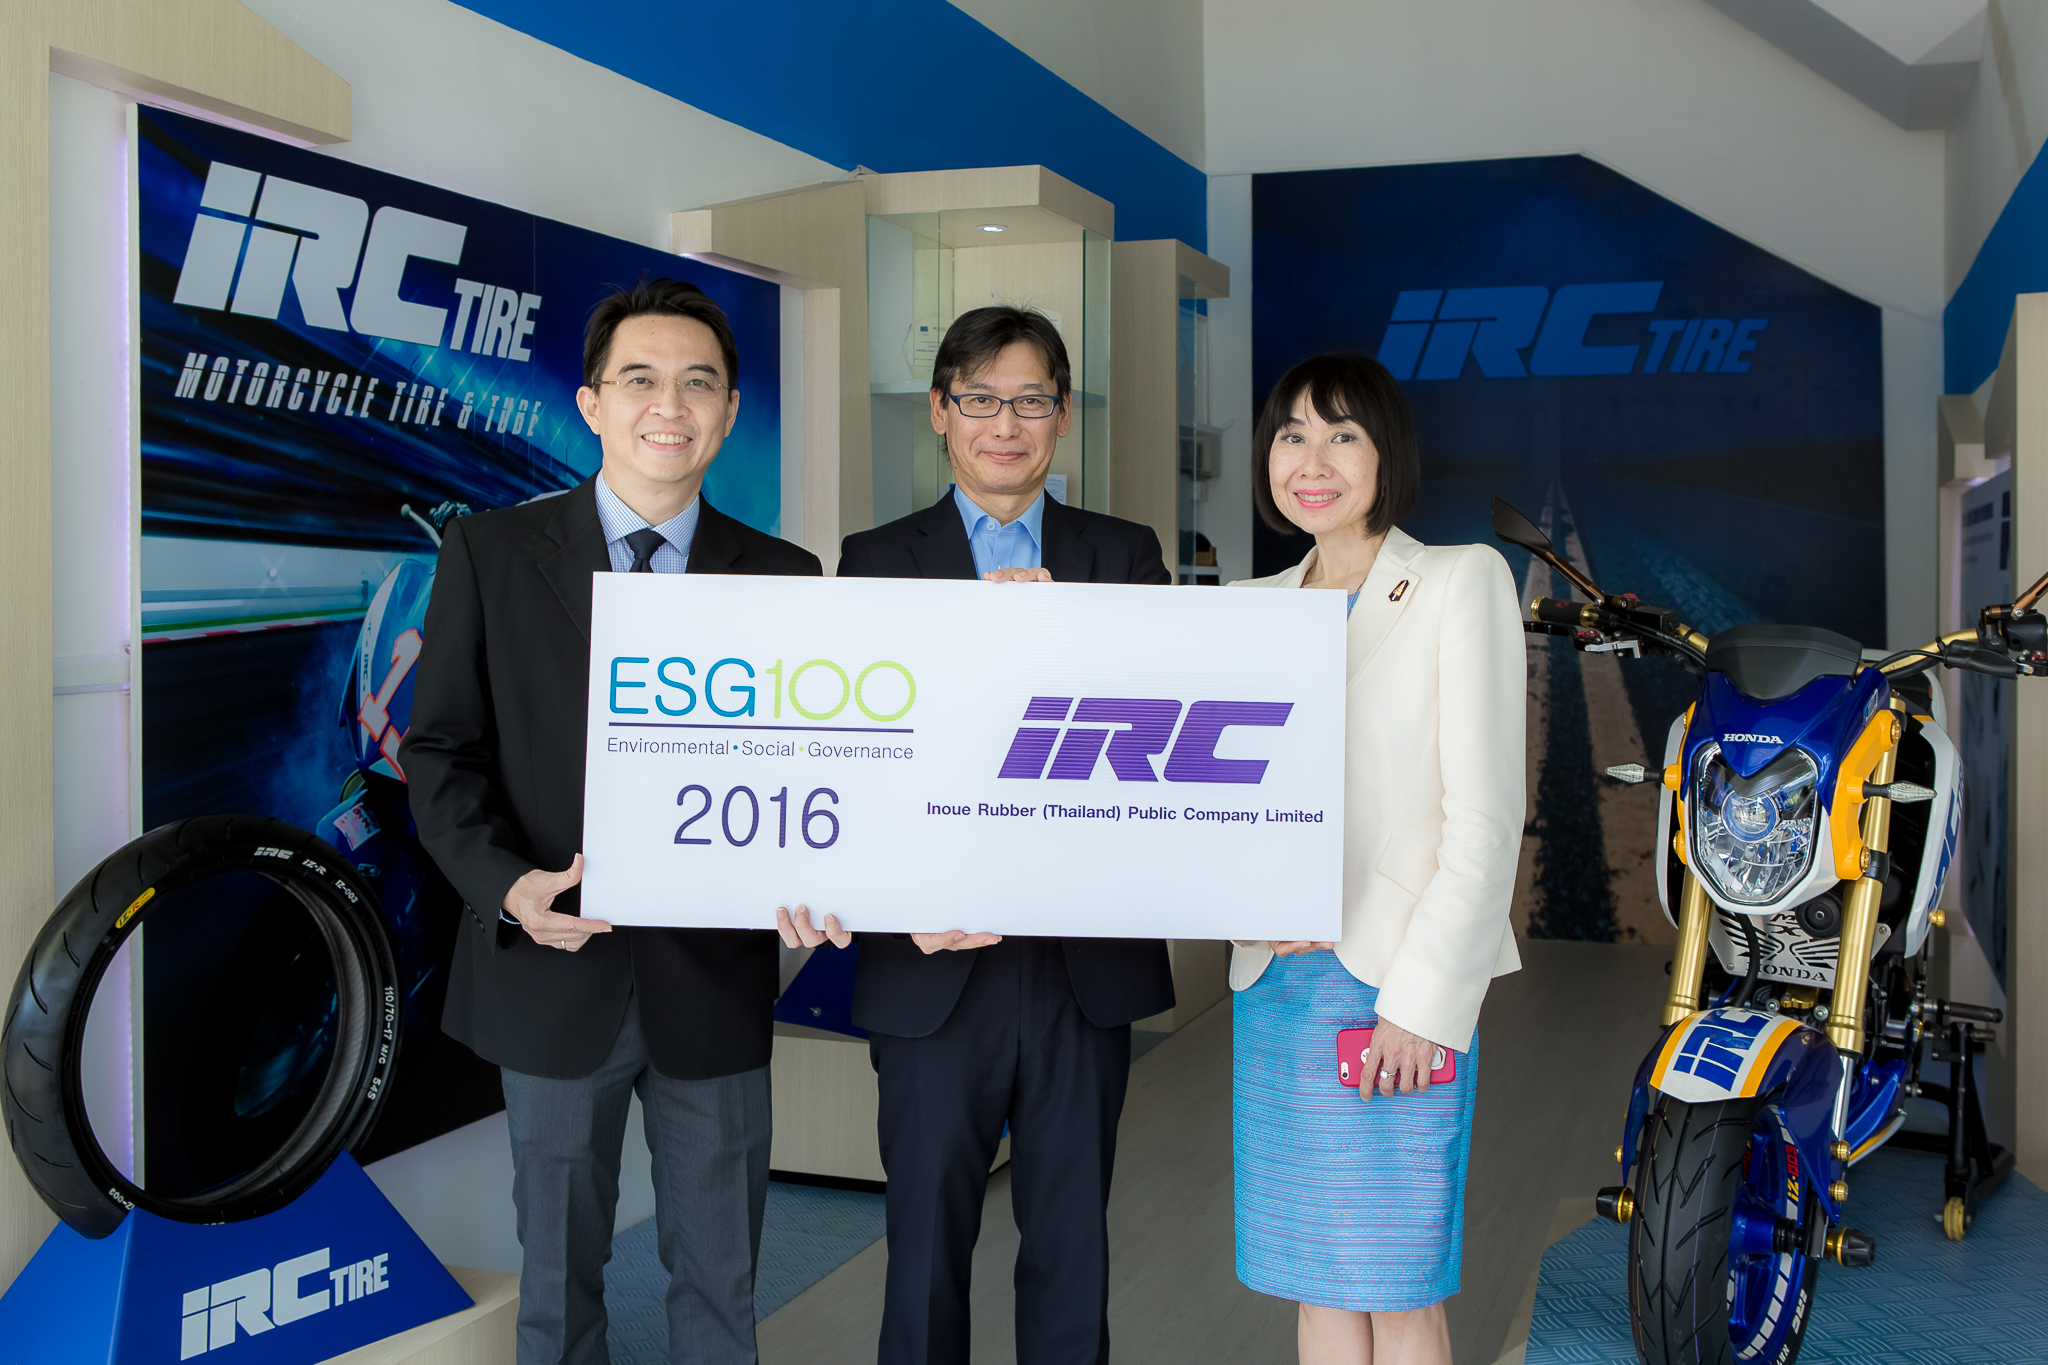 IRC รับ "Certificate of ESG100 Company" บริษัทที่โดดเด่นในการดำเนินธุรกิจอย่างยั่งยืน